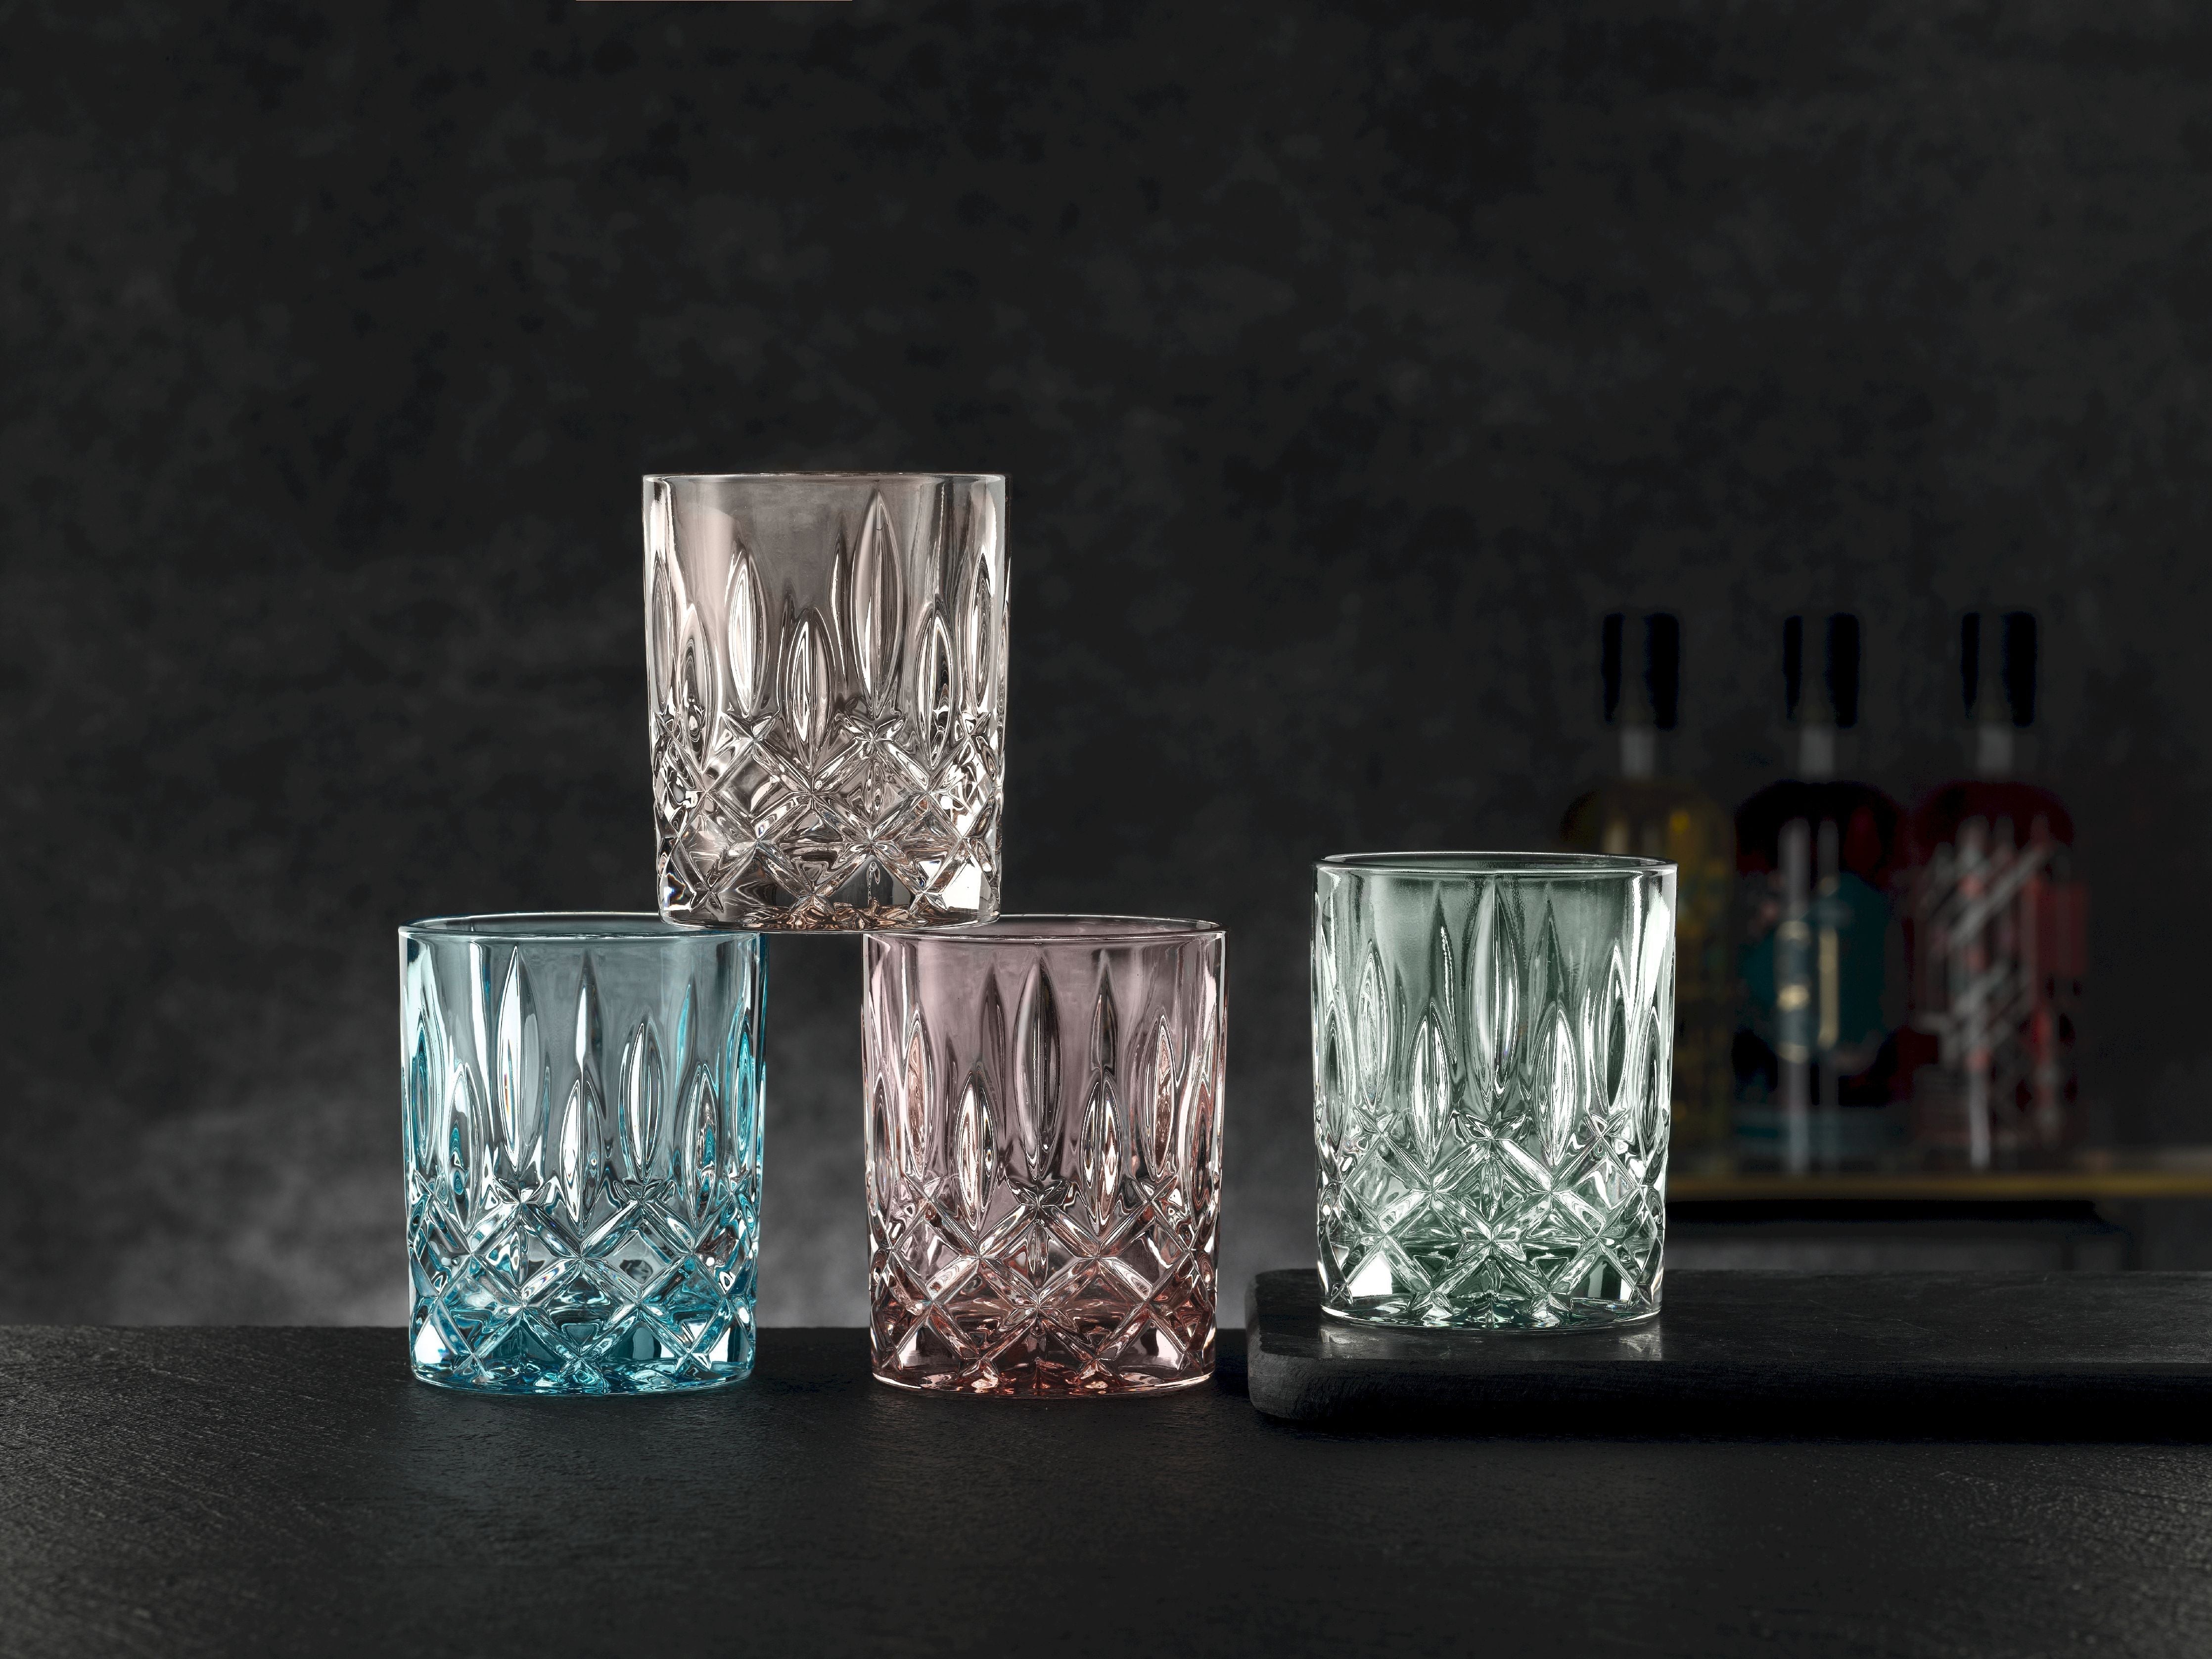 Nachtmann Noblesse Whisky Glass Mint 295 Ml, Set Of 2